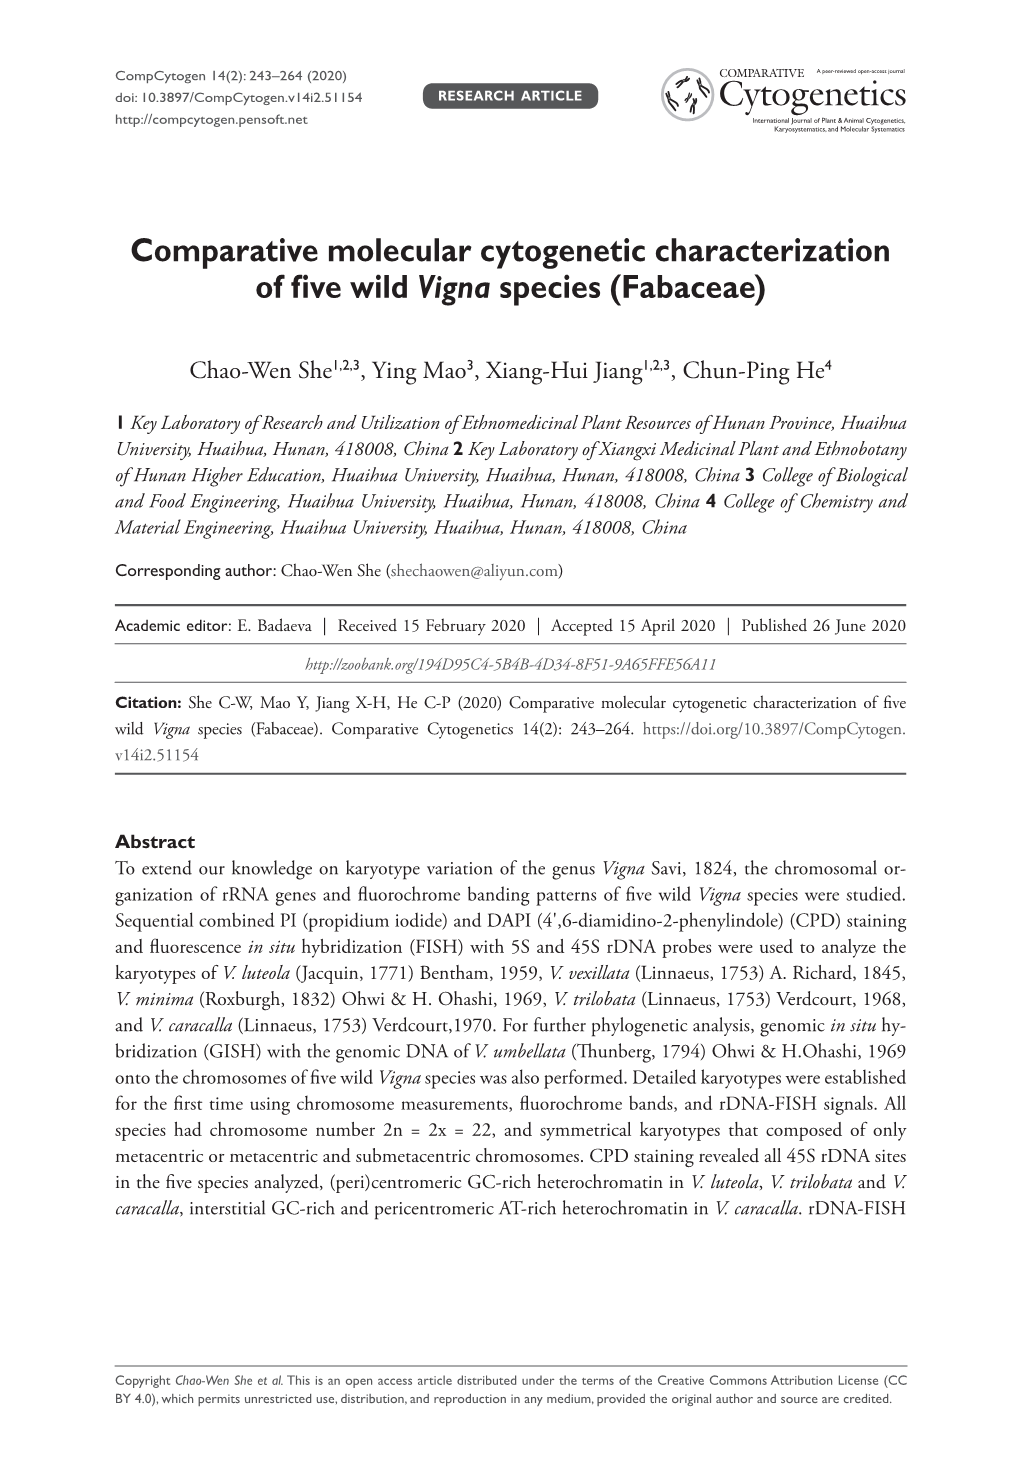 Comparative Molecular Cytogenetic Characterization of Five Wild Vigna Species (Fabaceae)